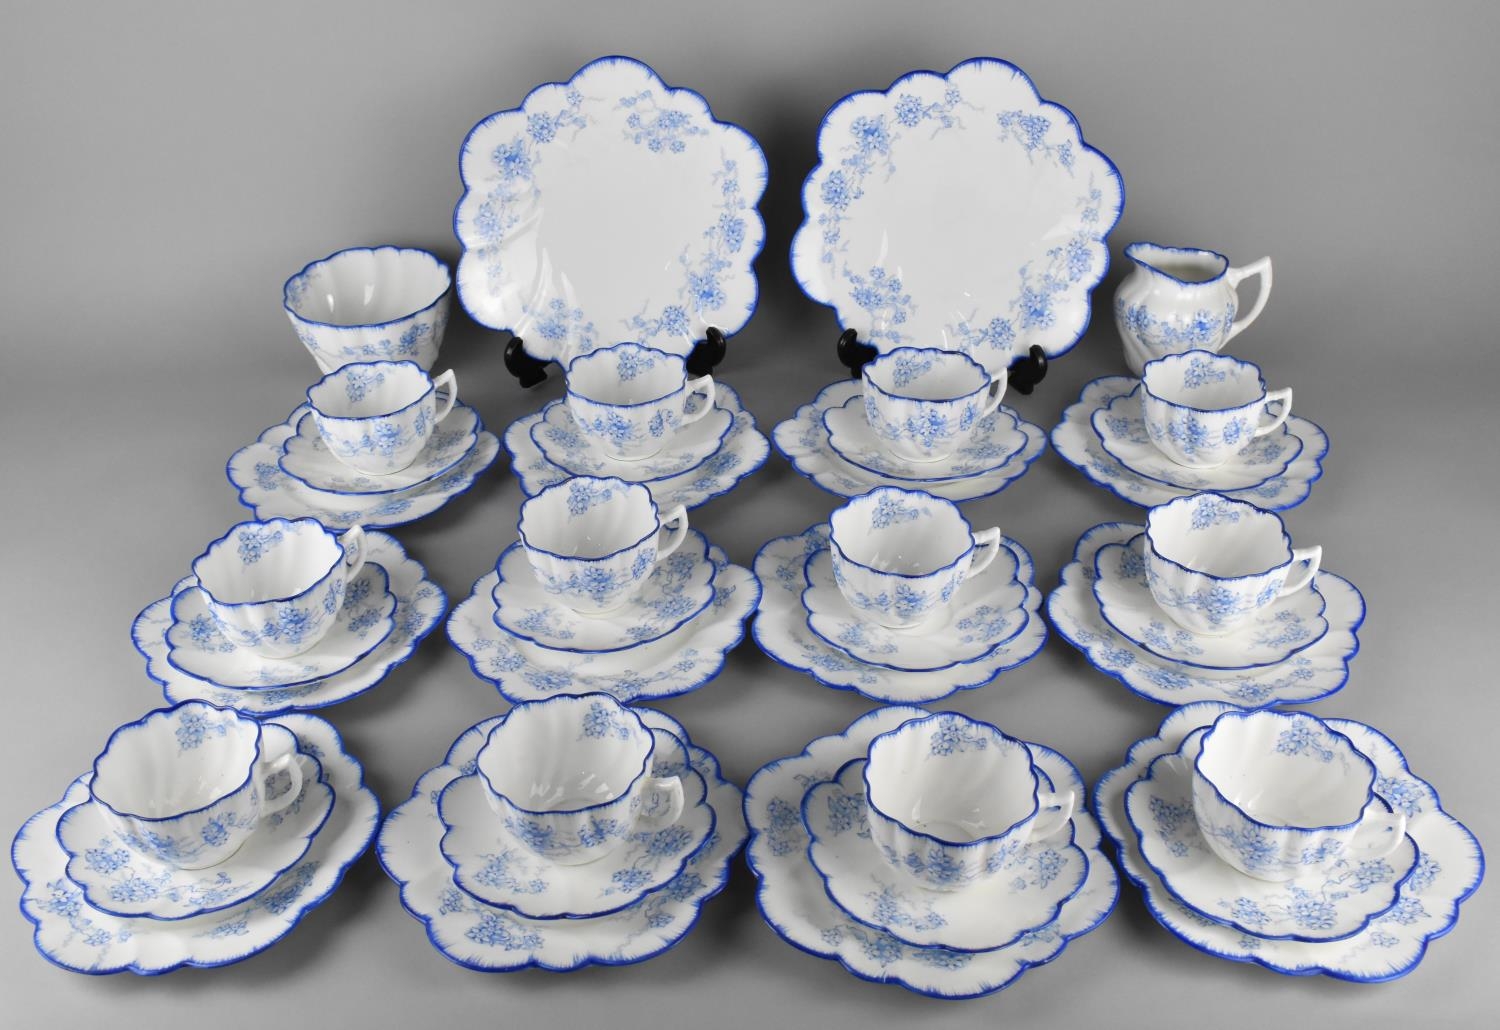 A Grafton China & Sons Blue Floral Decorated Tea Set to Comprise Twelve Cups, Twelve Saucers, Twelve